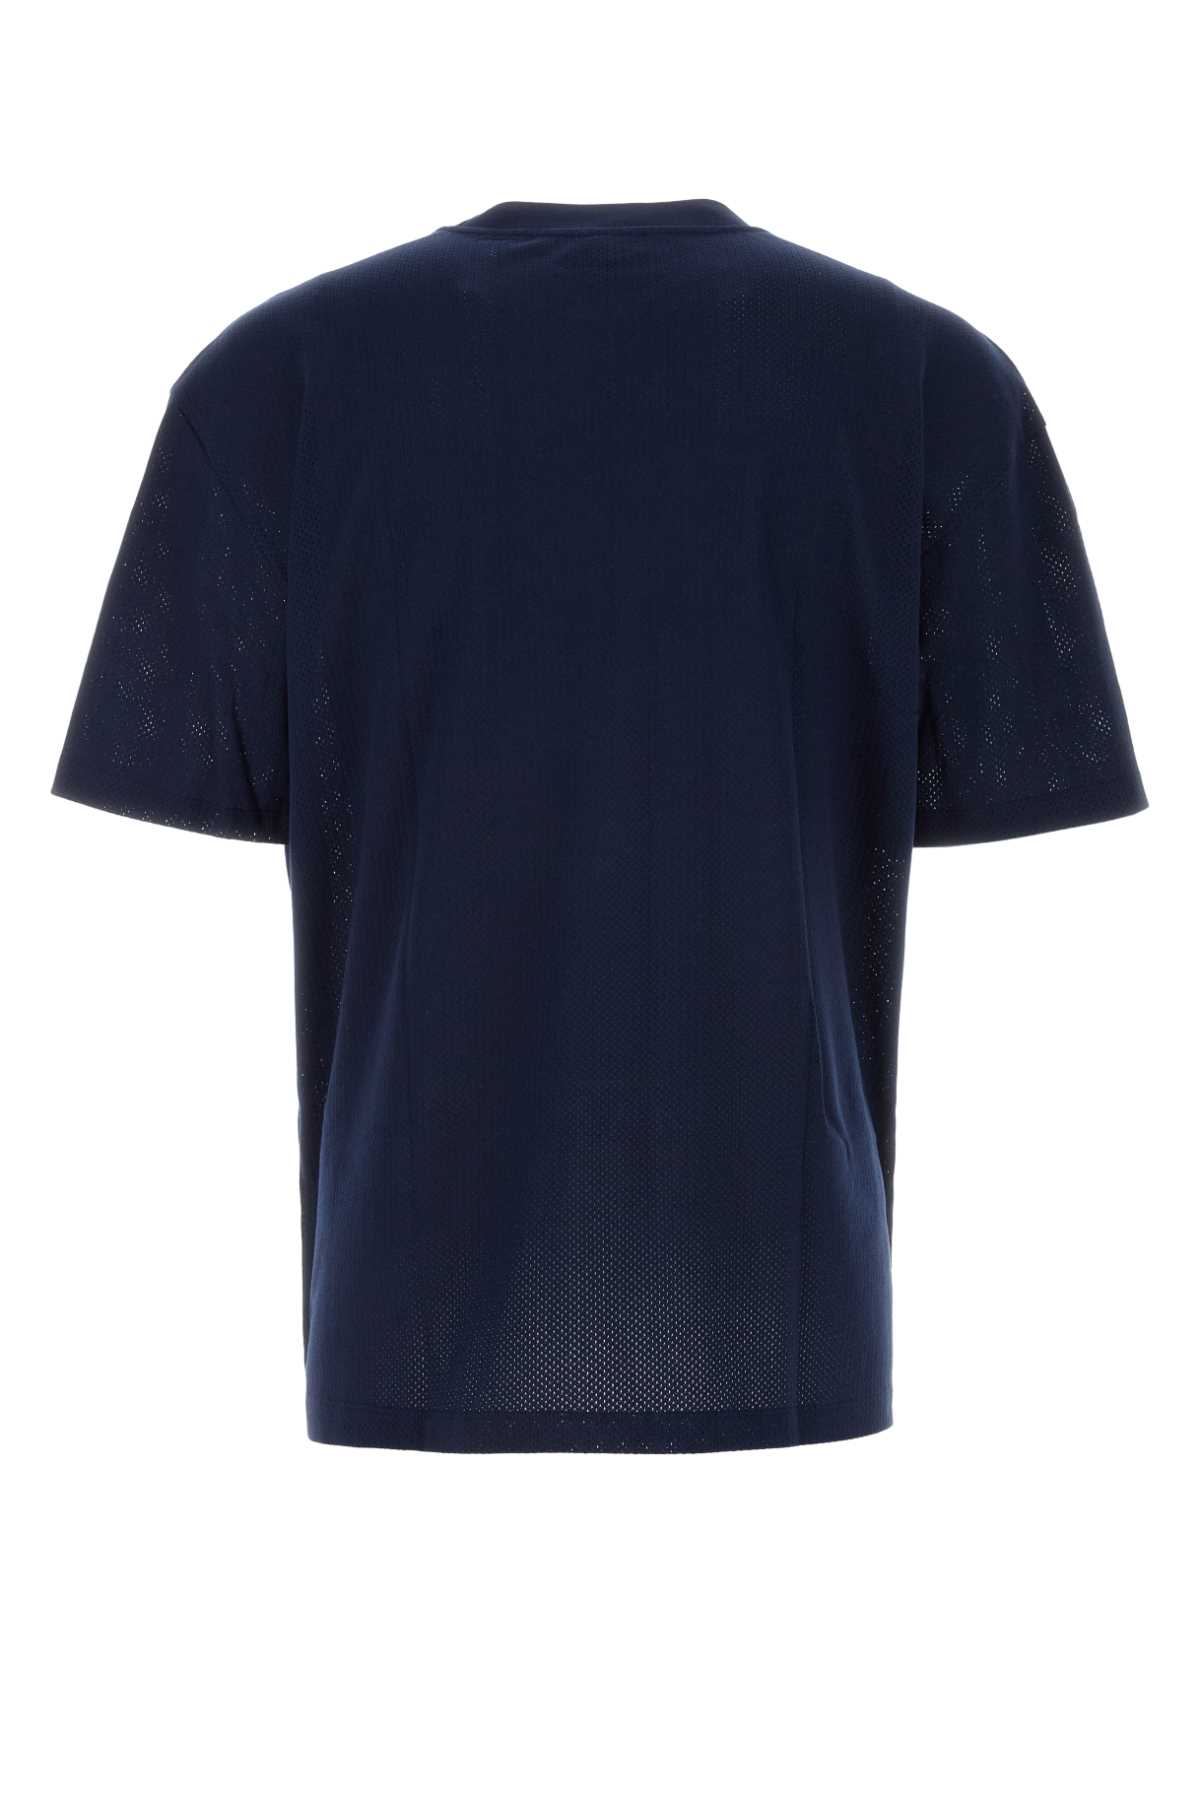 Apc Midnight Blue Cotton Oversize T-shirt